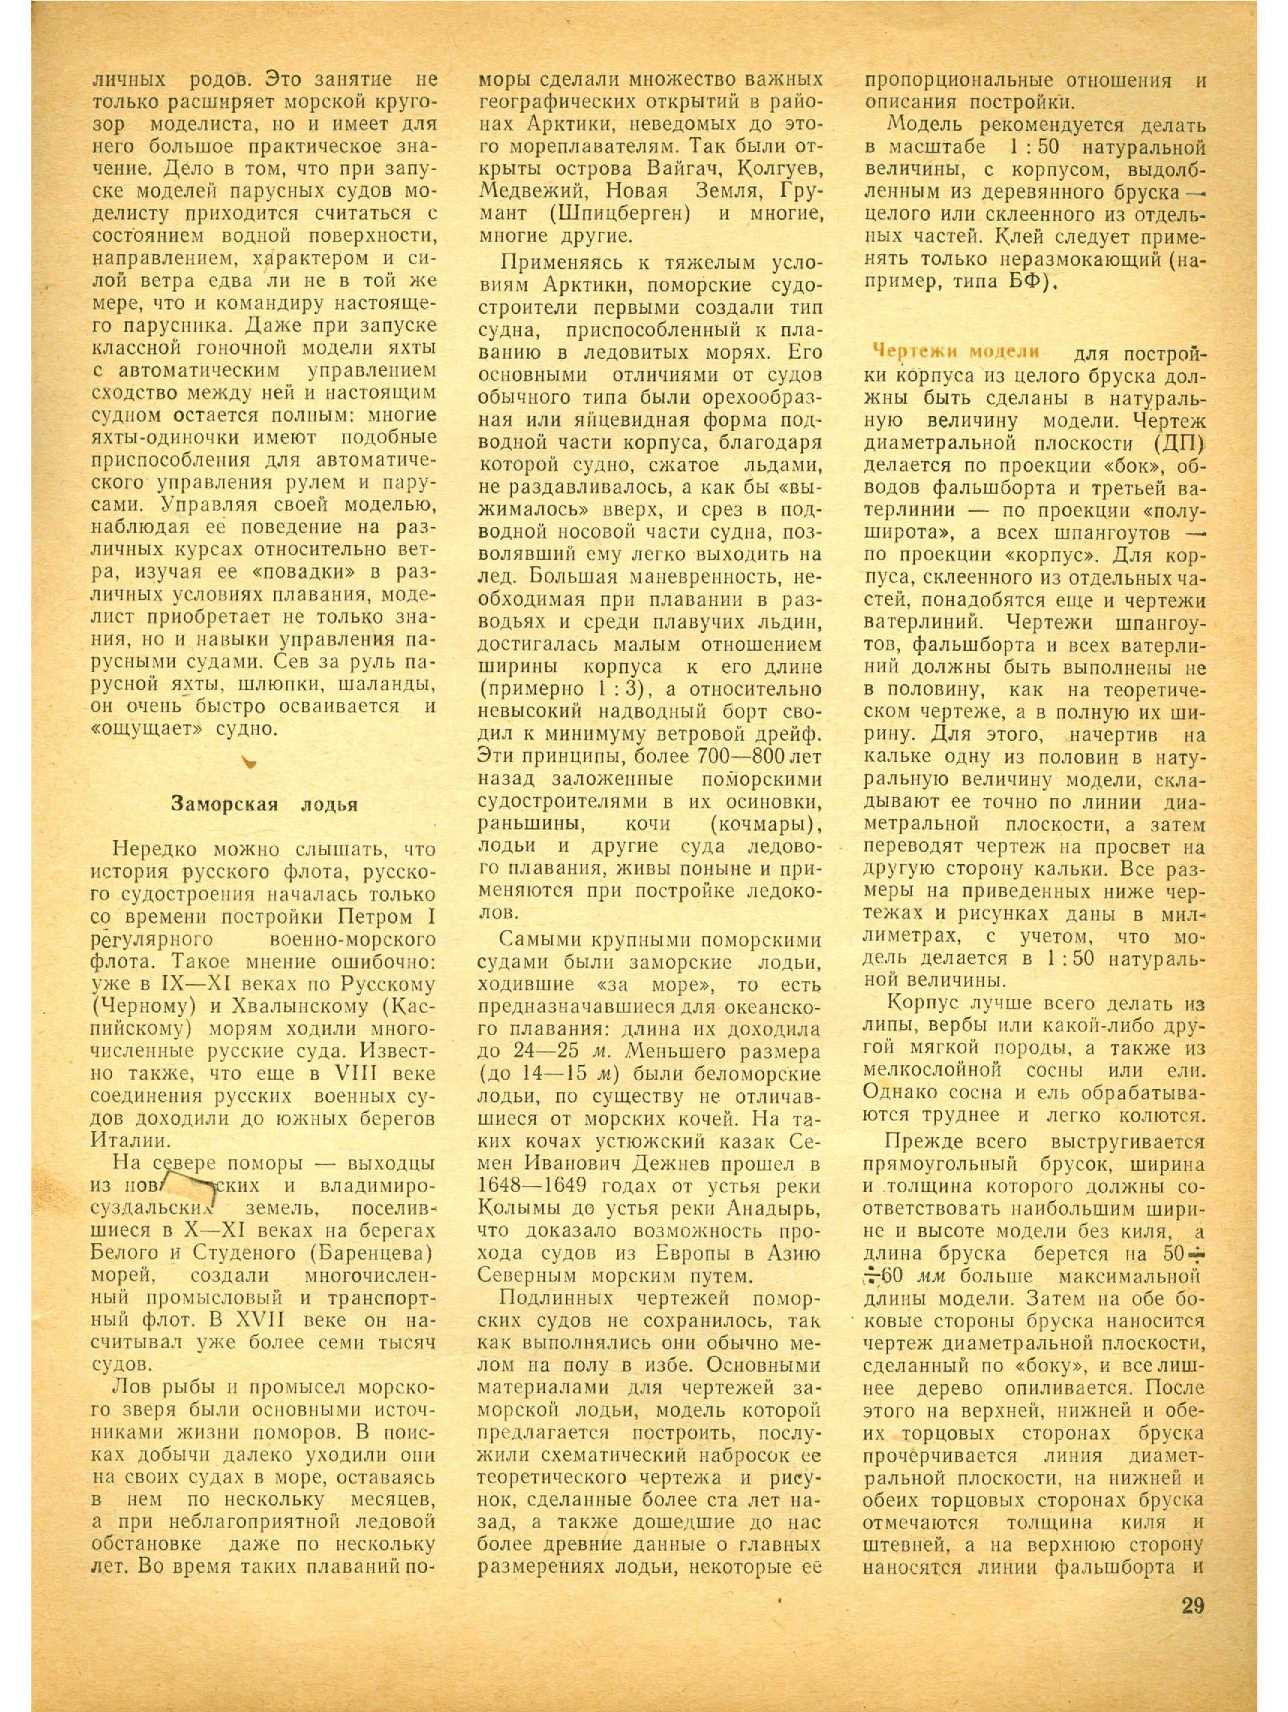 ЮМК 13, 1965, 29 c.